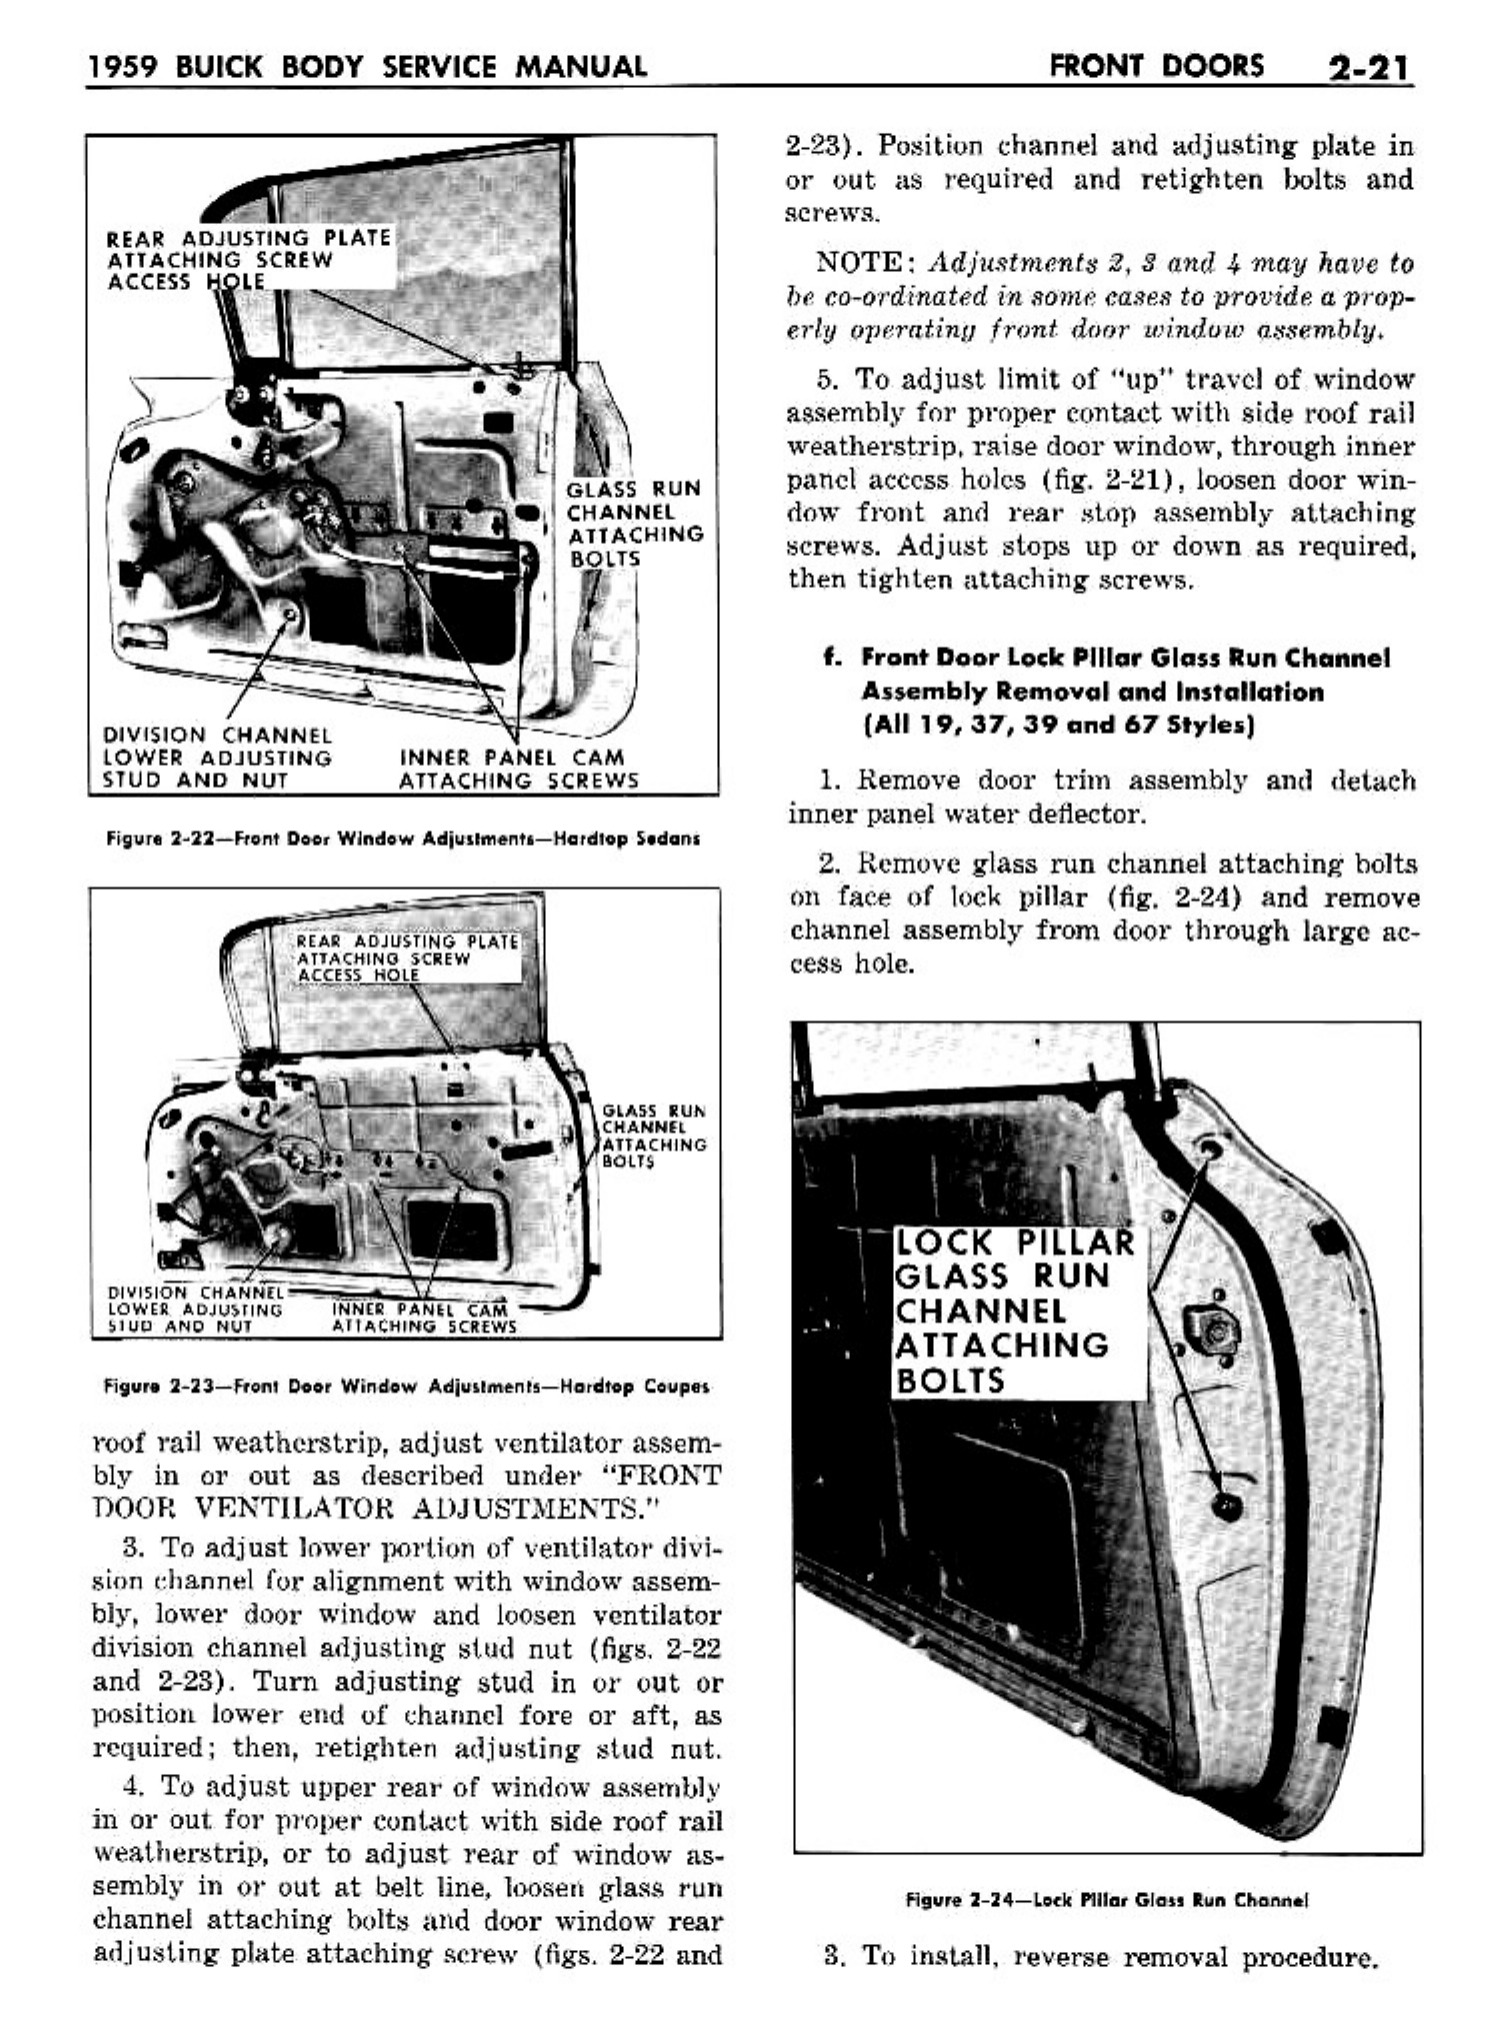 n_03 1959 Buick Body Service-Doors_21.jpg